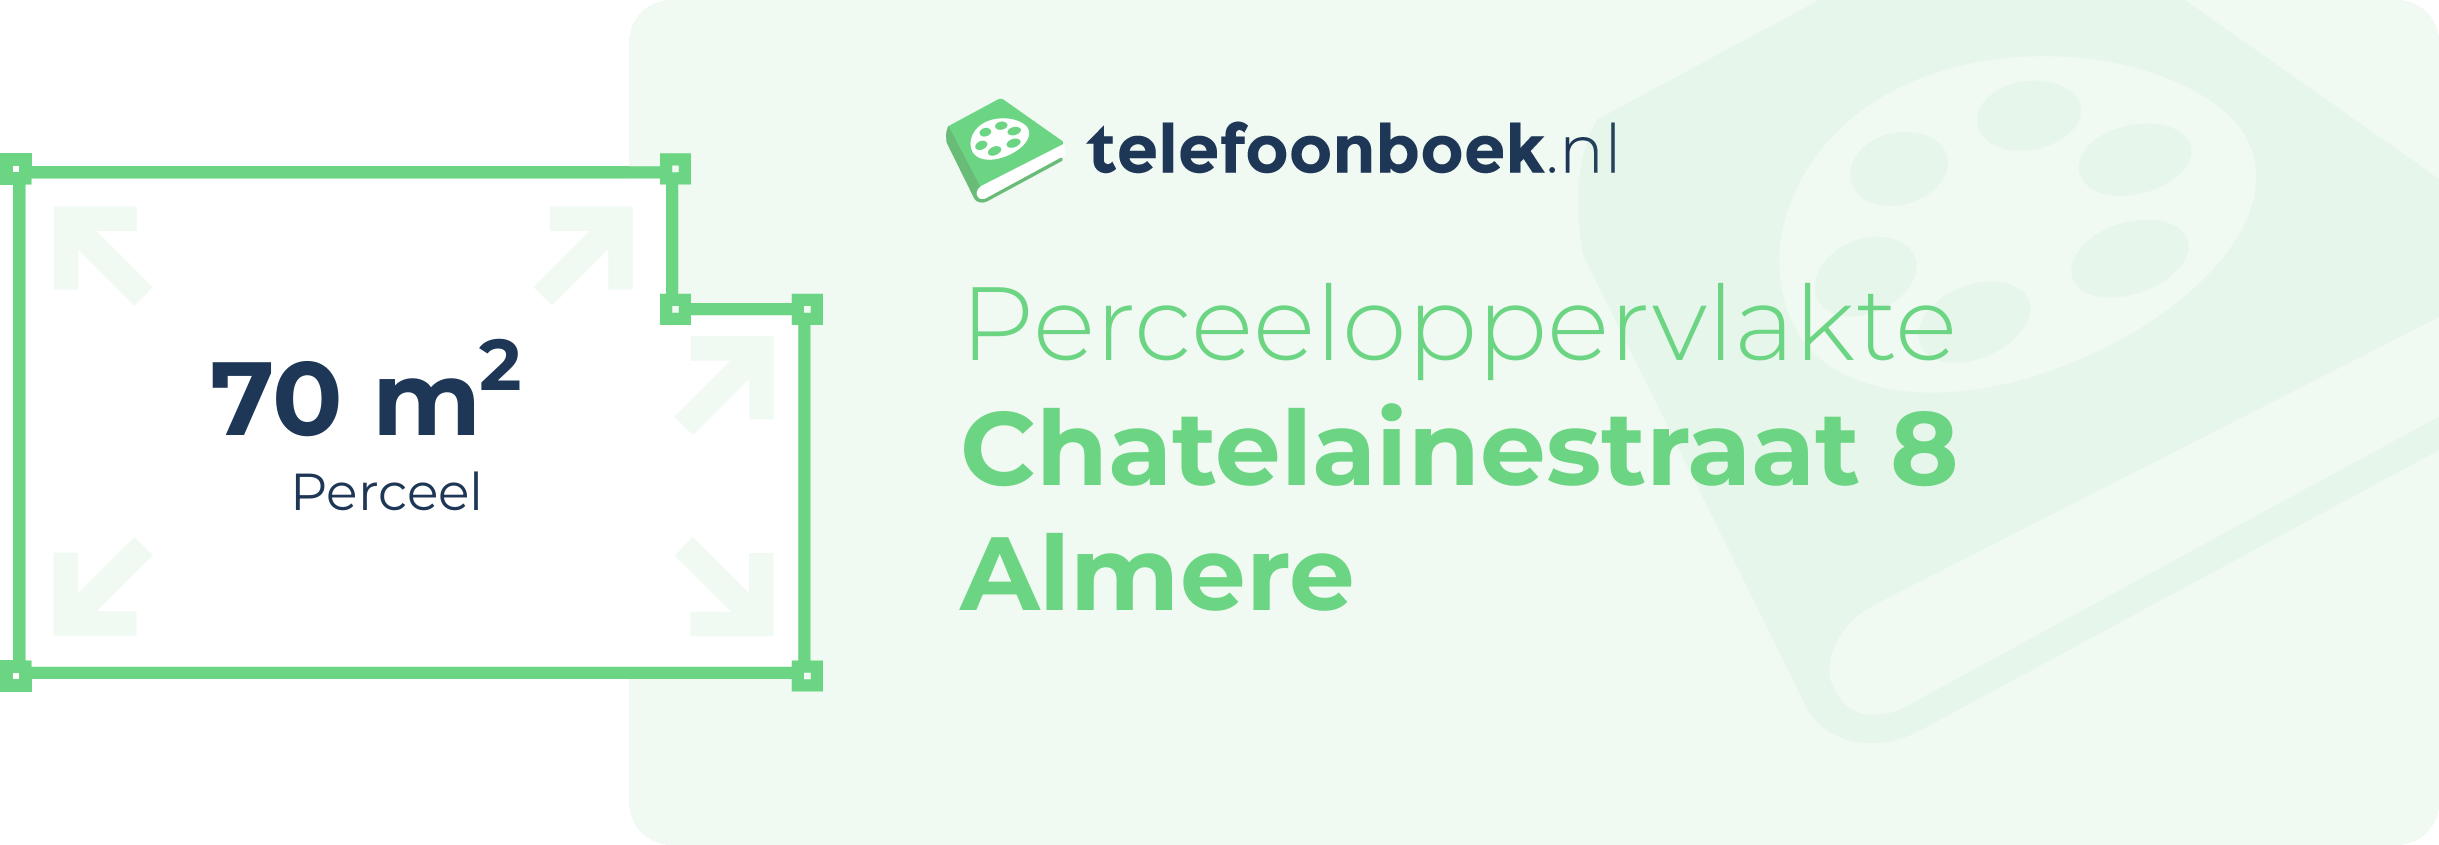 Perceeloppervlakte Chatelainestraat 8 Almere